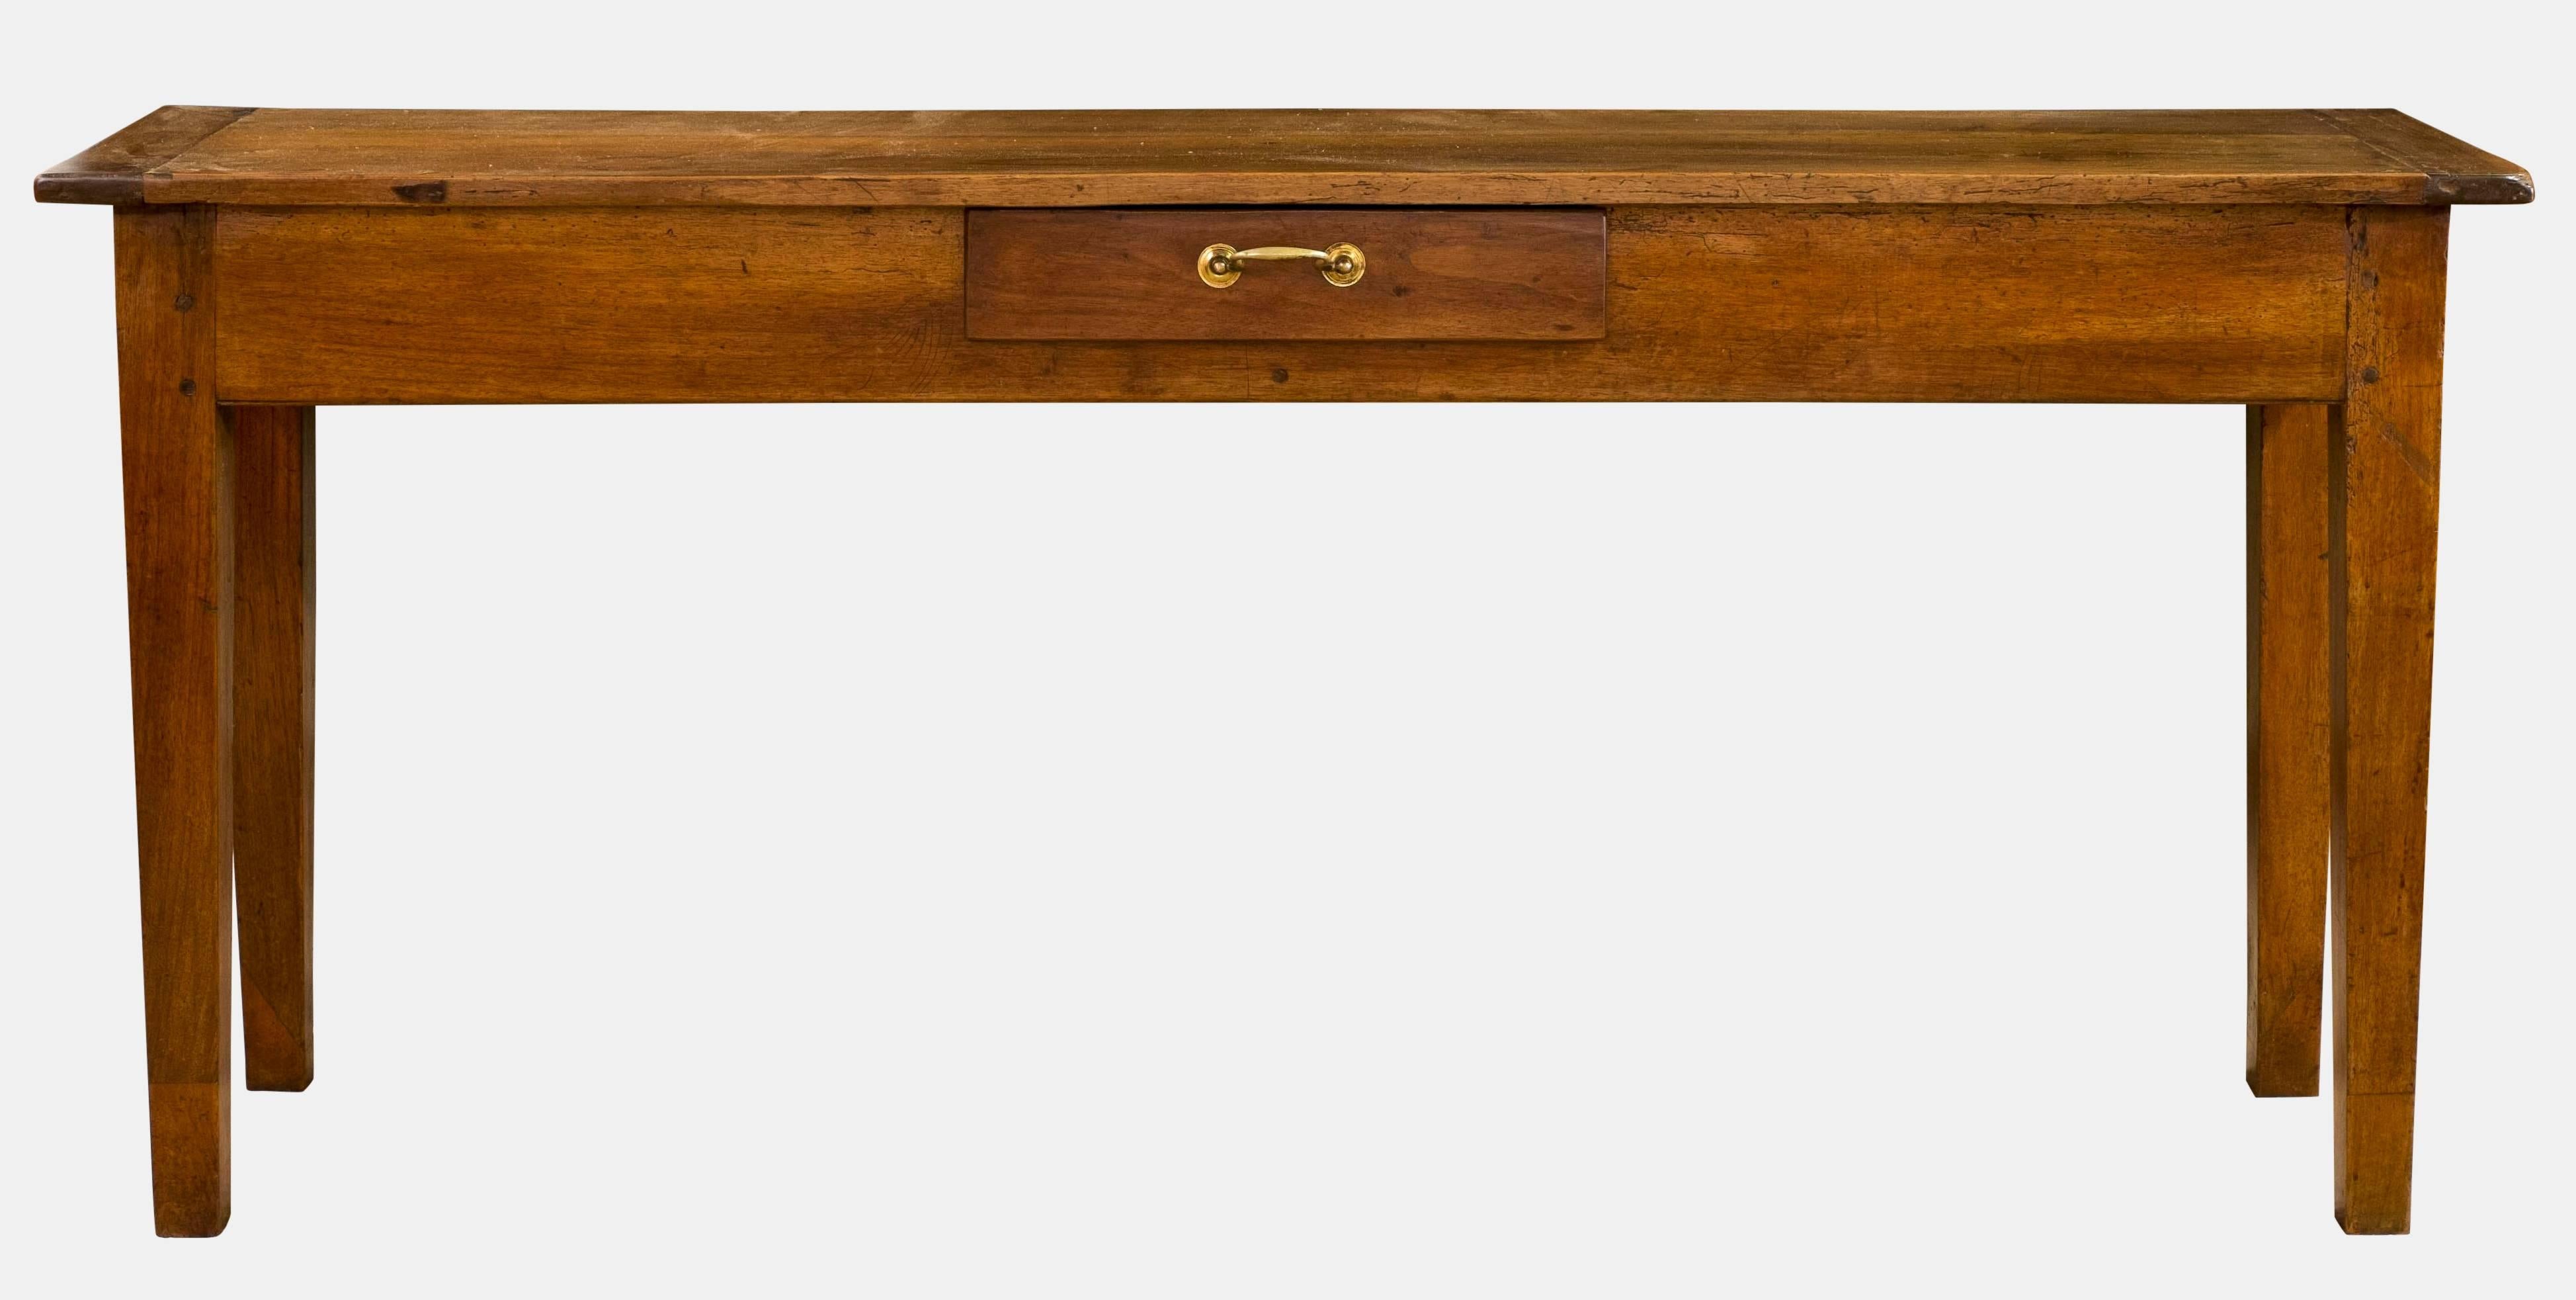 19th century French walnut single drawer server.

Measures: 72.5cm high,
161cm wide,
40.5cm deep.